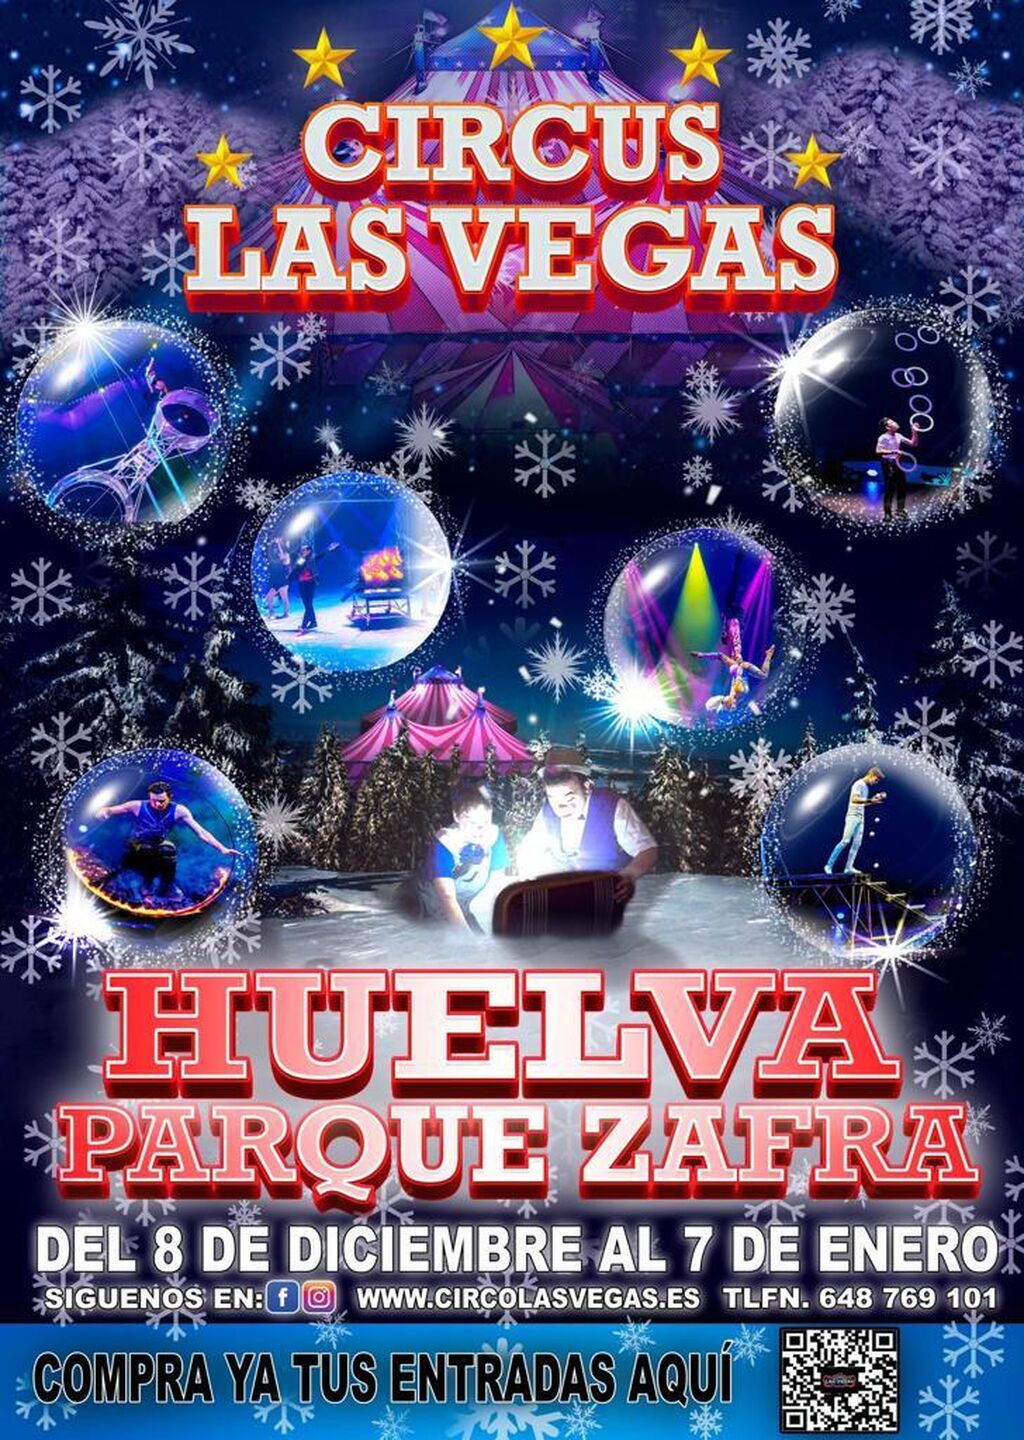 Circus Las Vegas en Huelva